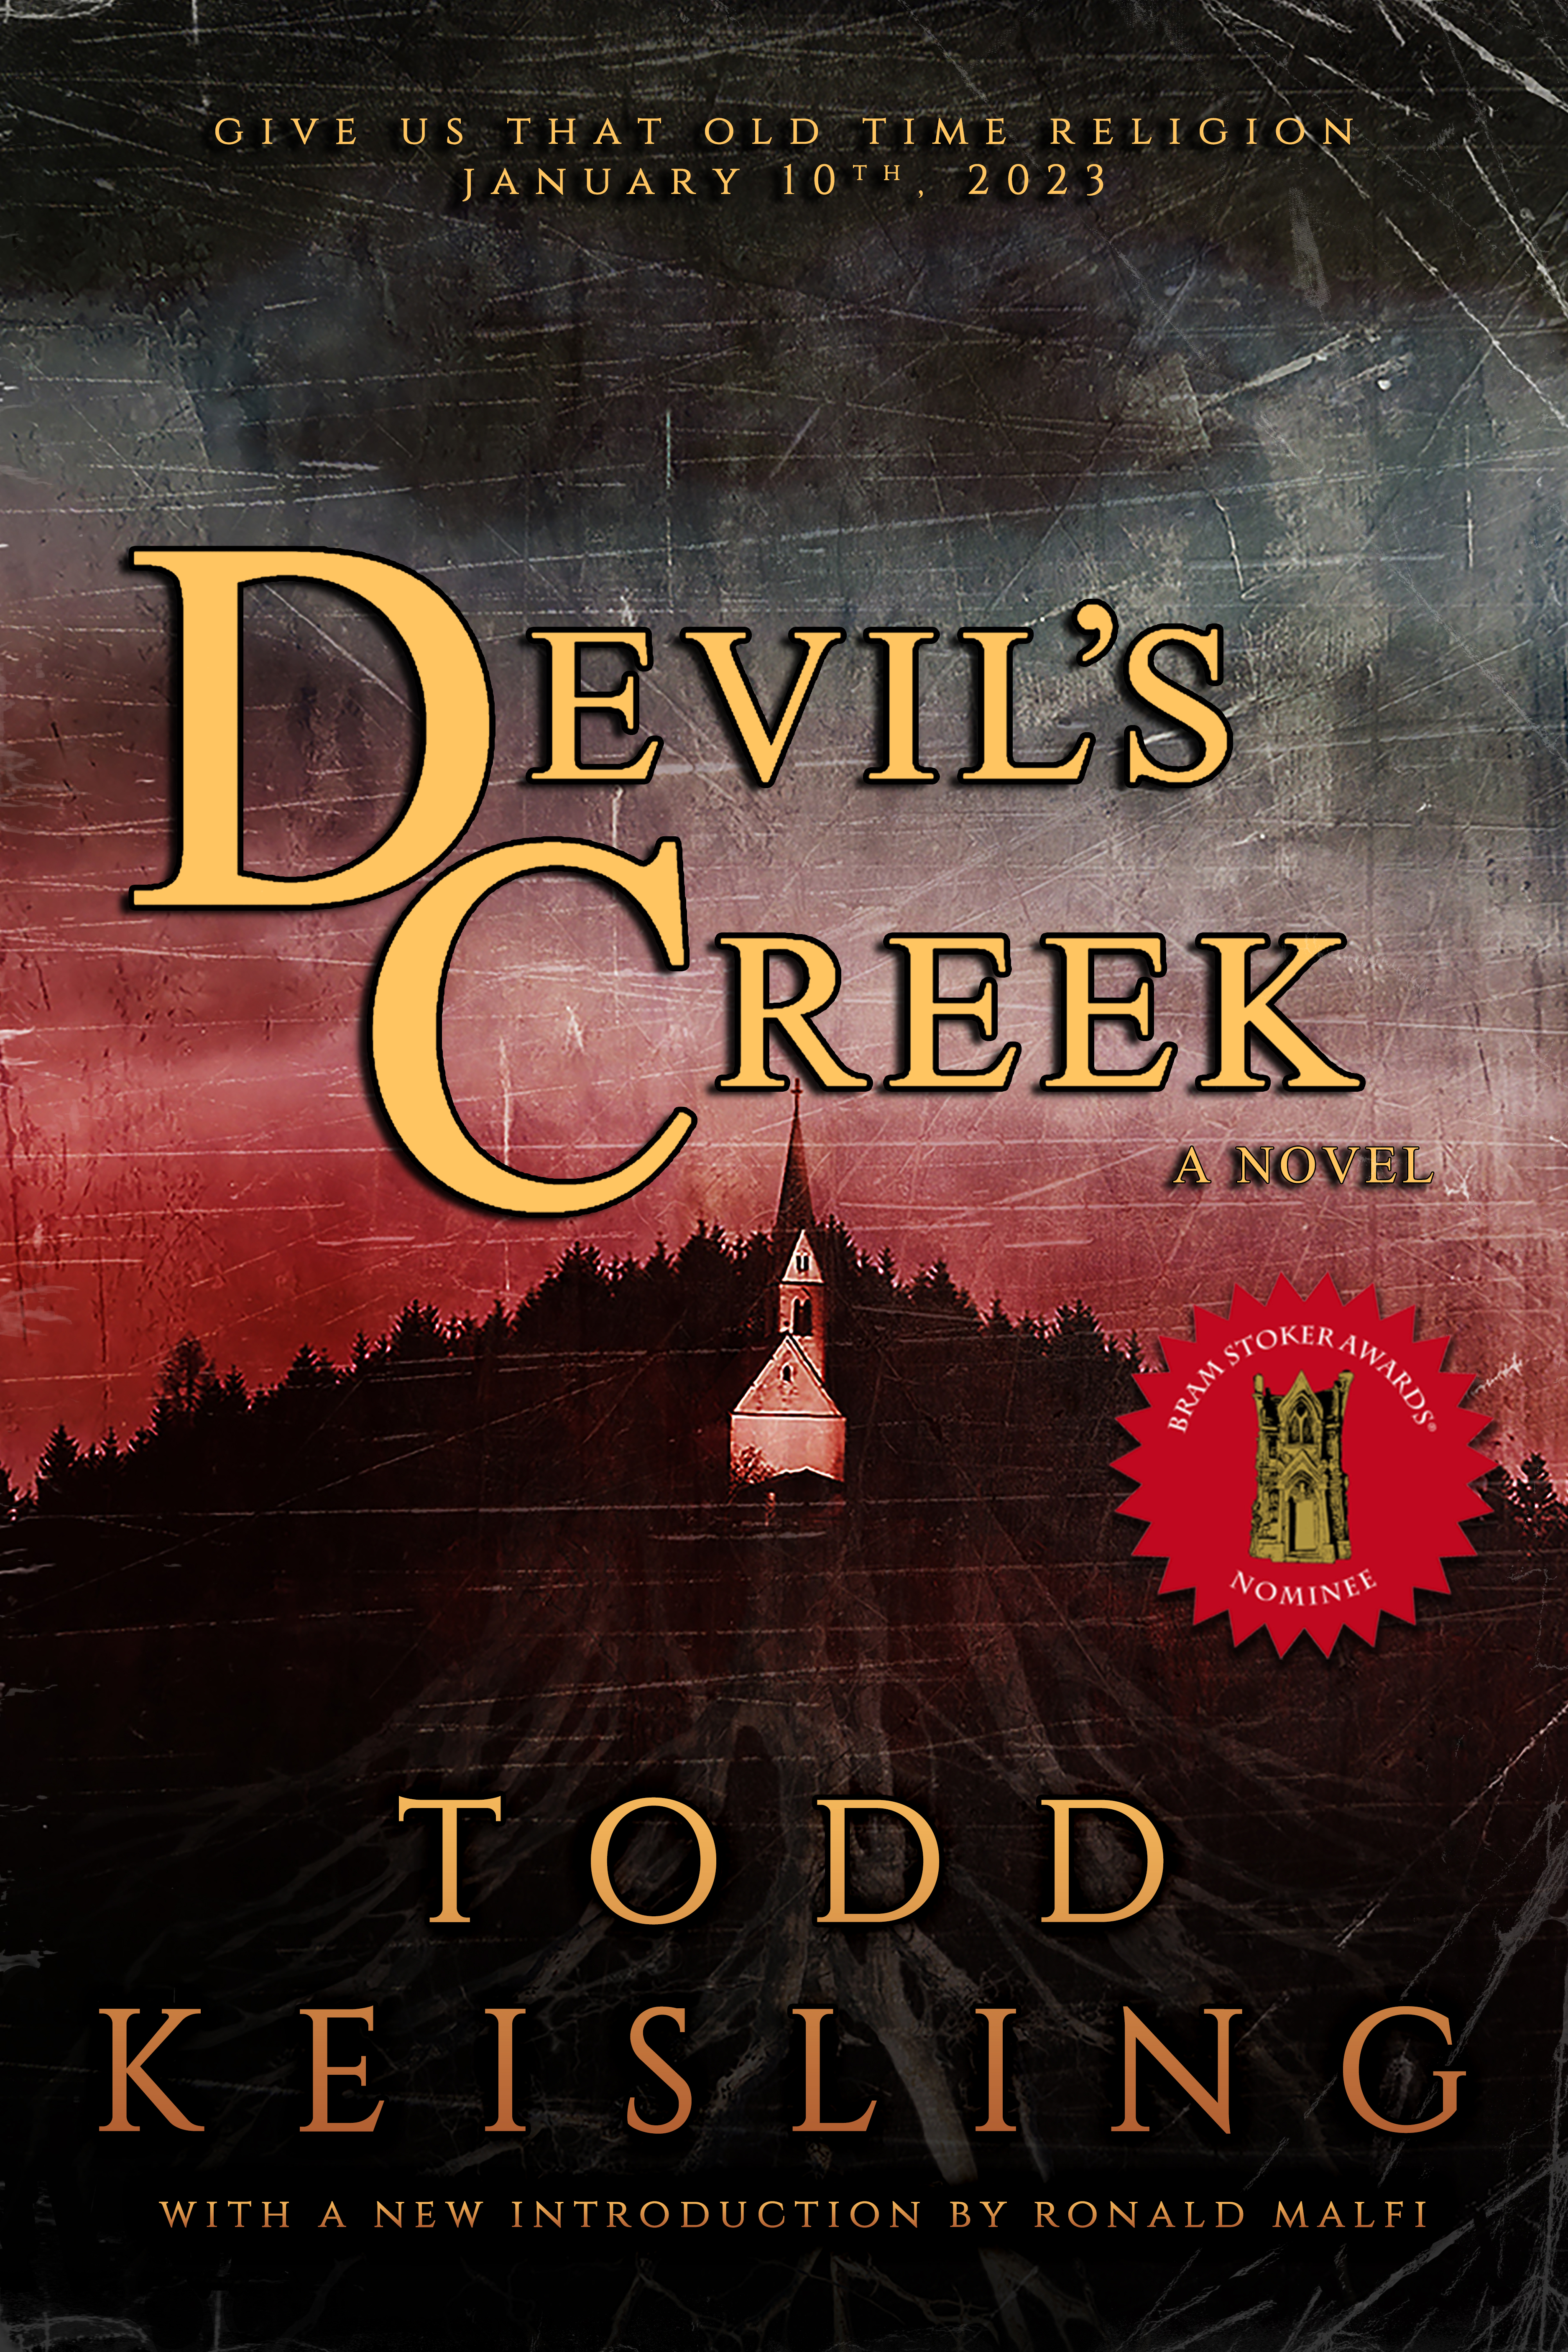 Devil's Creek, by Todd Keisling